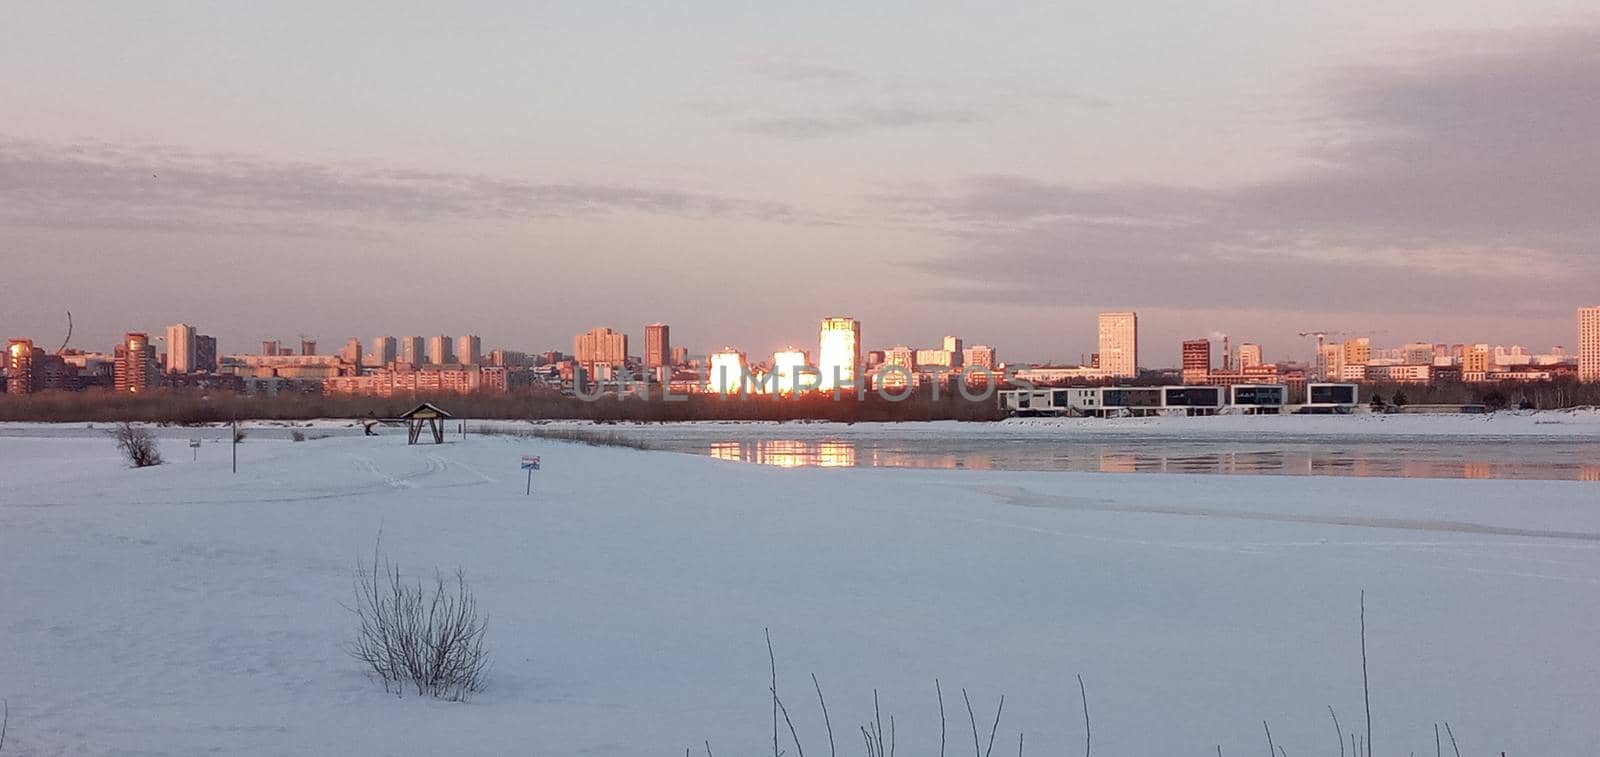  Panorama of Novosibirsk on the Ob river.The capital of Siberia. Novosibirsk, Siberia, Russia. by Rina_Dozornaya